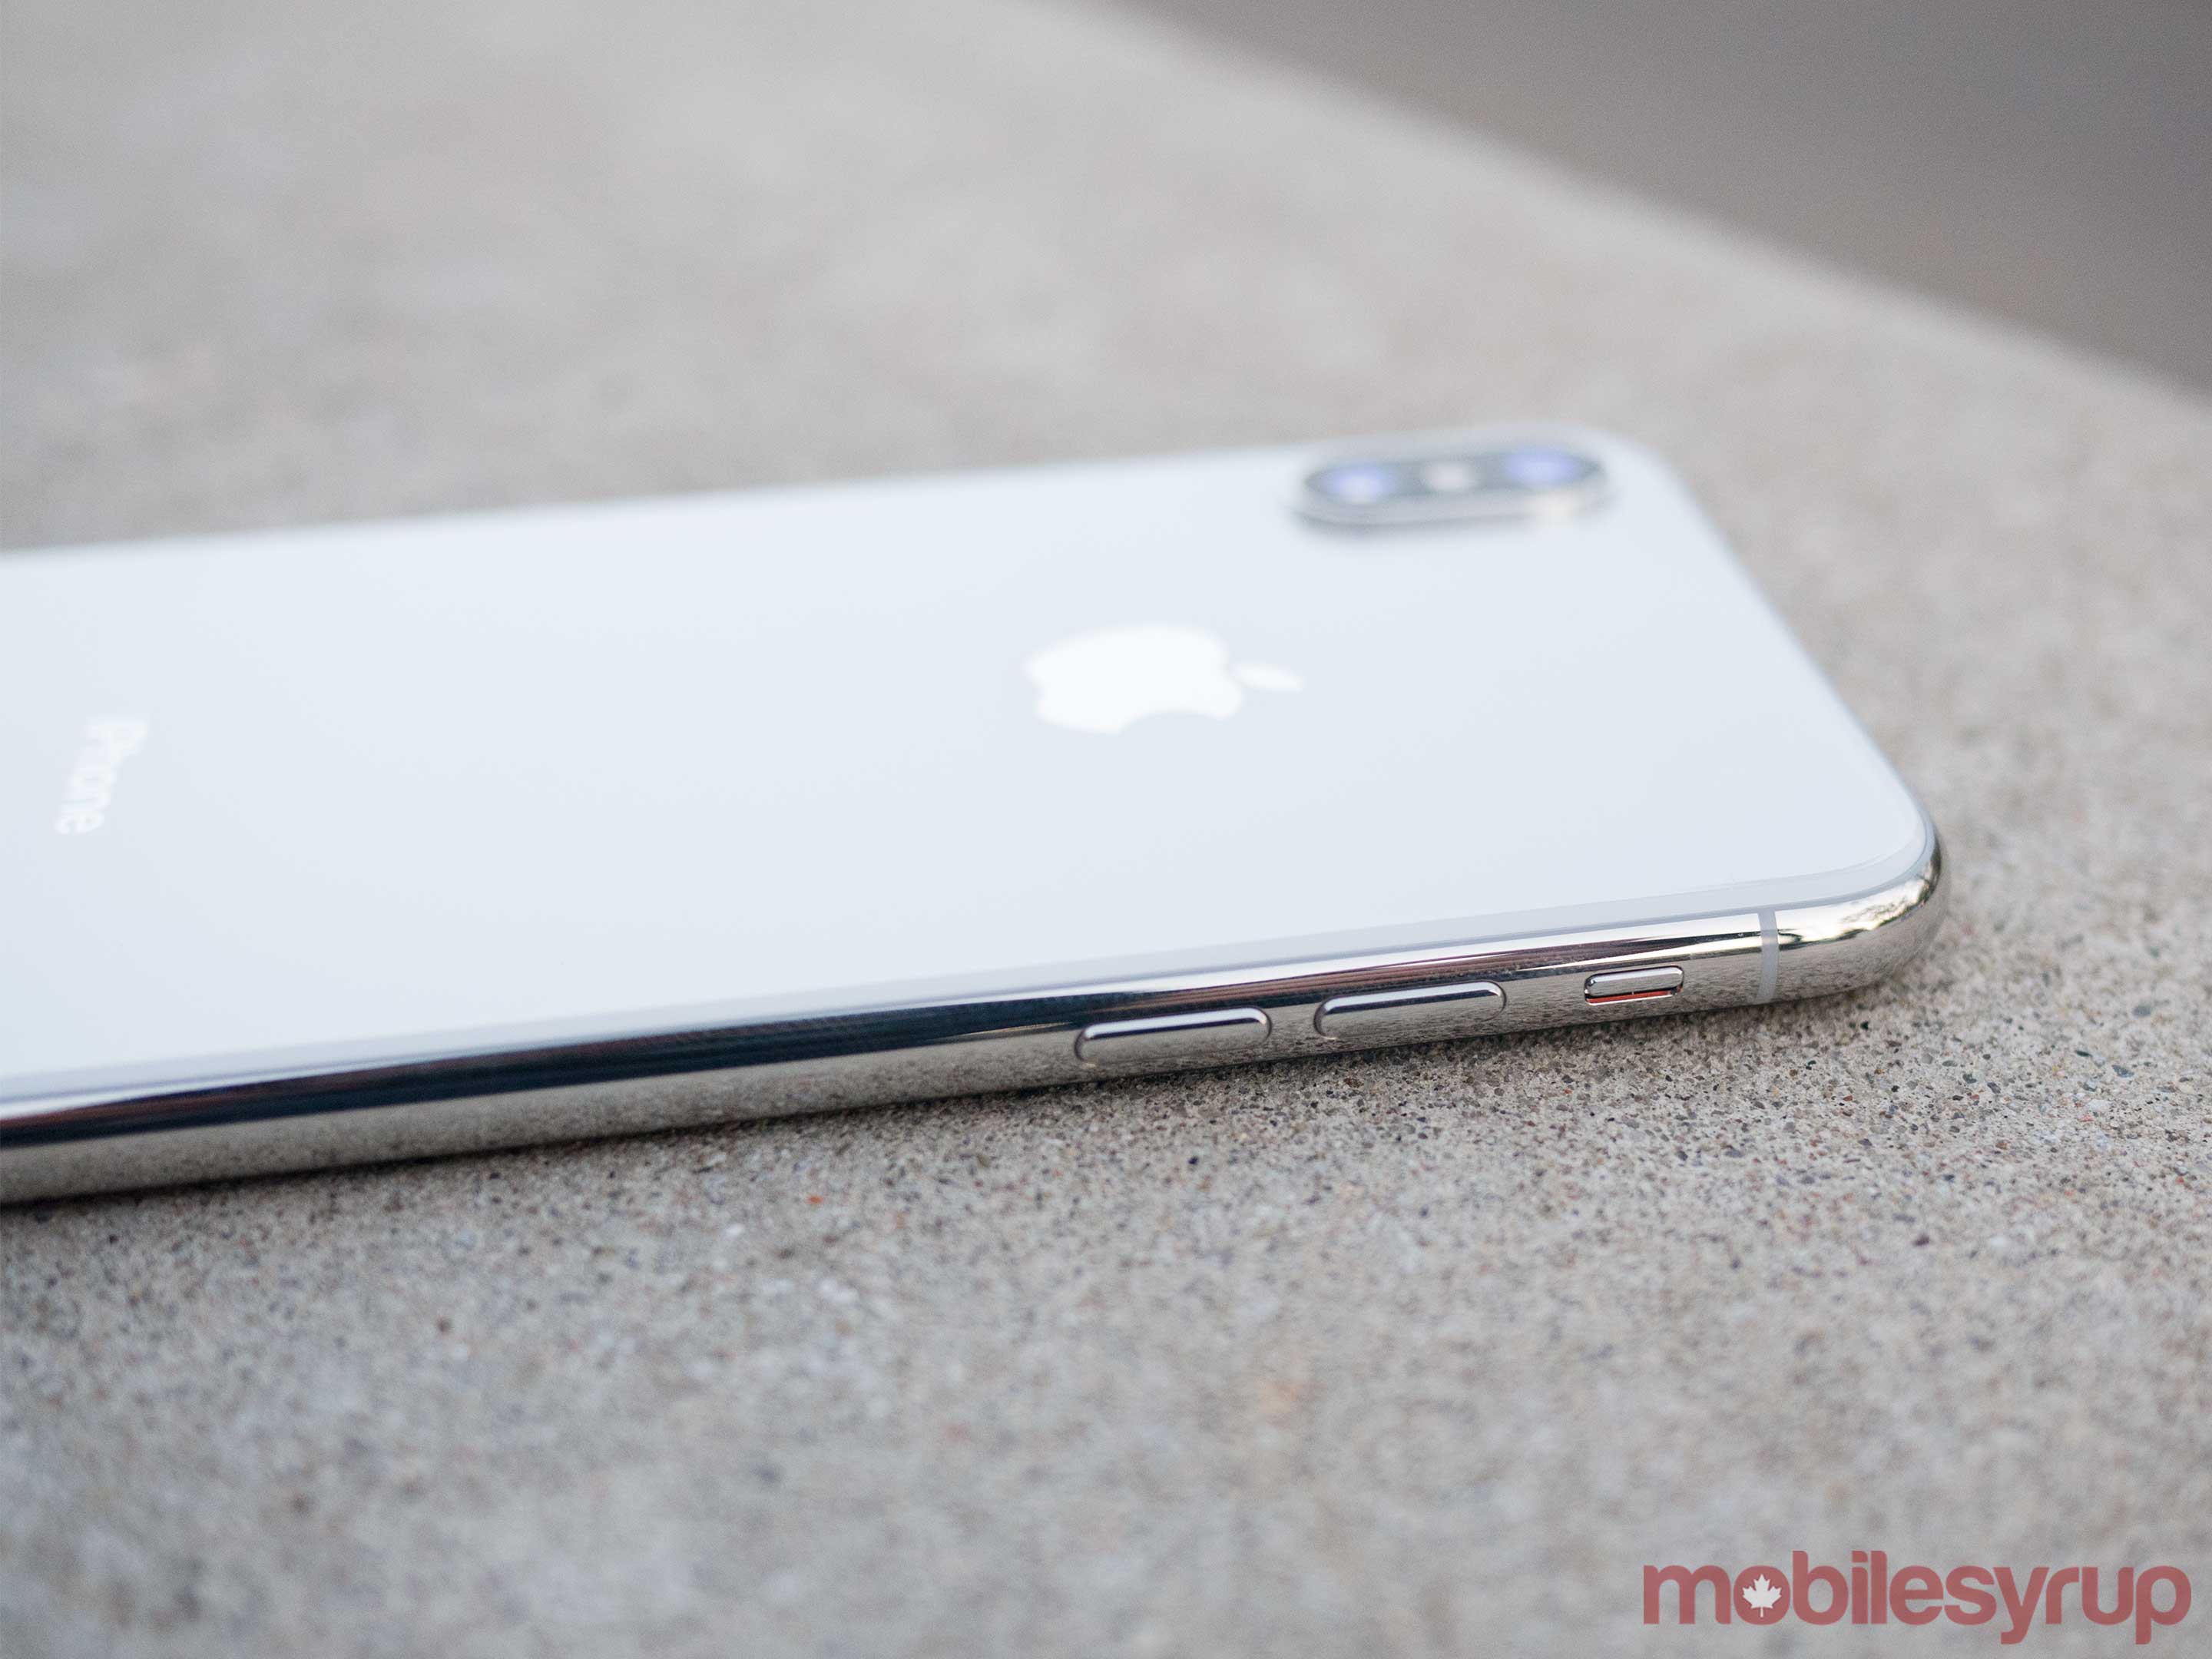 iPhone X side aluminum bezel